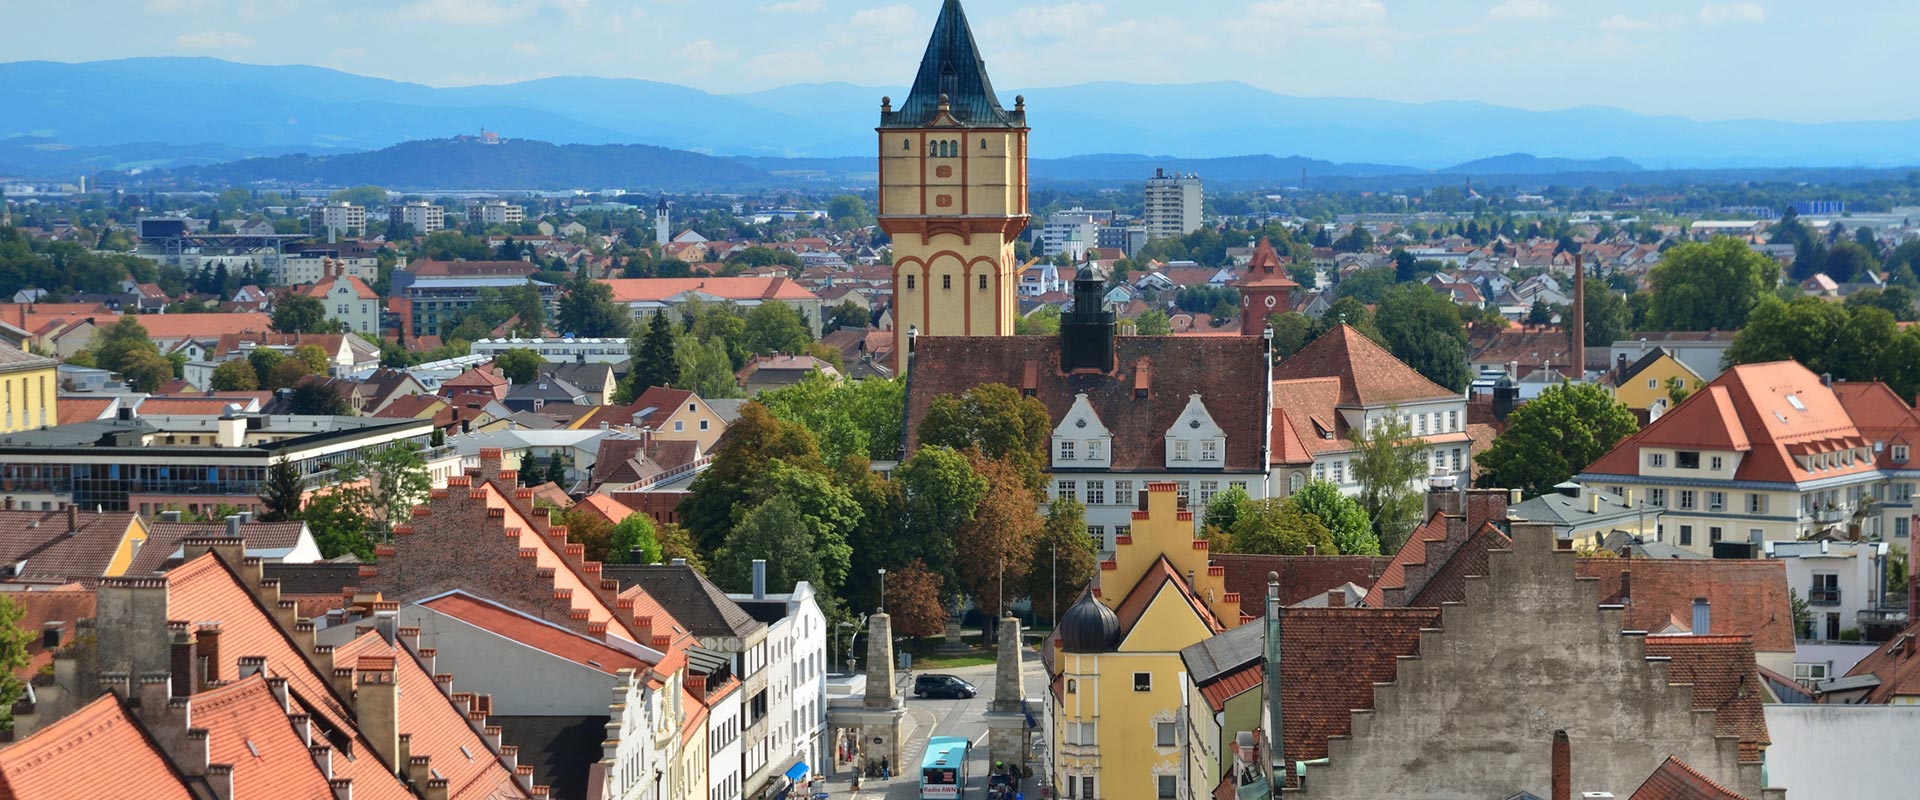 Straubing - Donaustadt με παράδοση και φαντασία 1